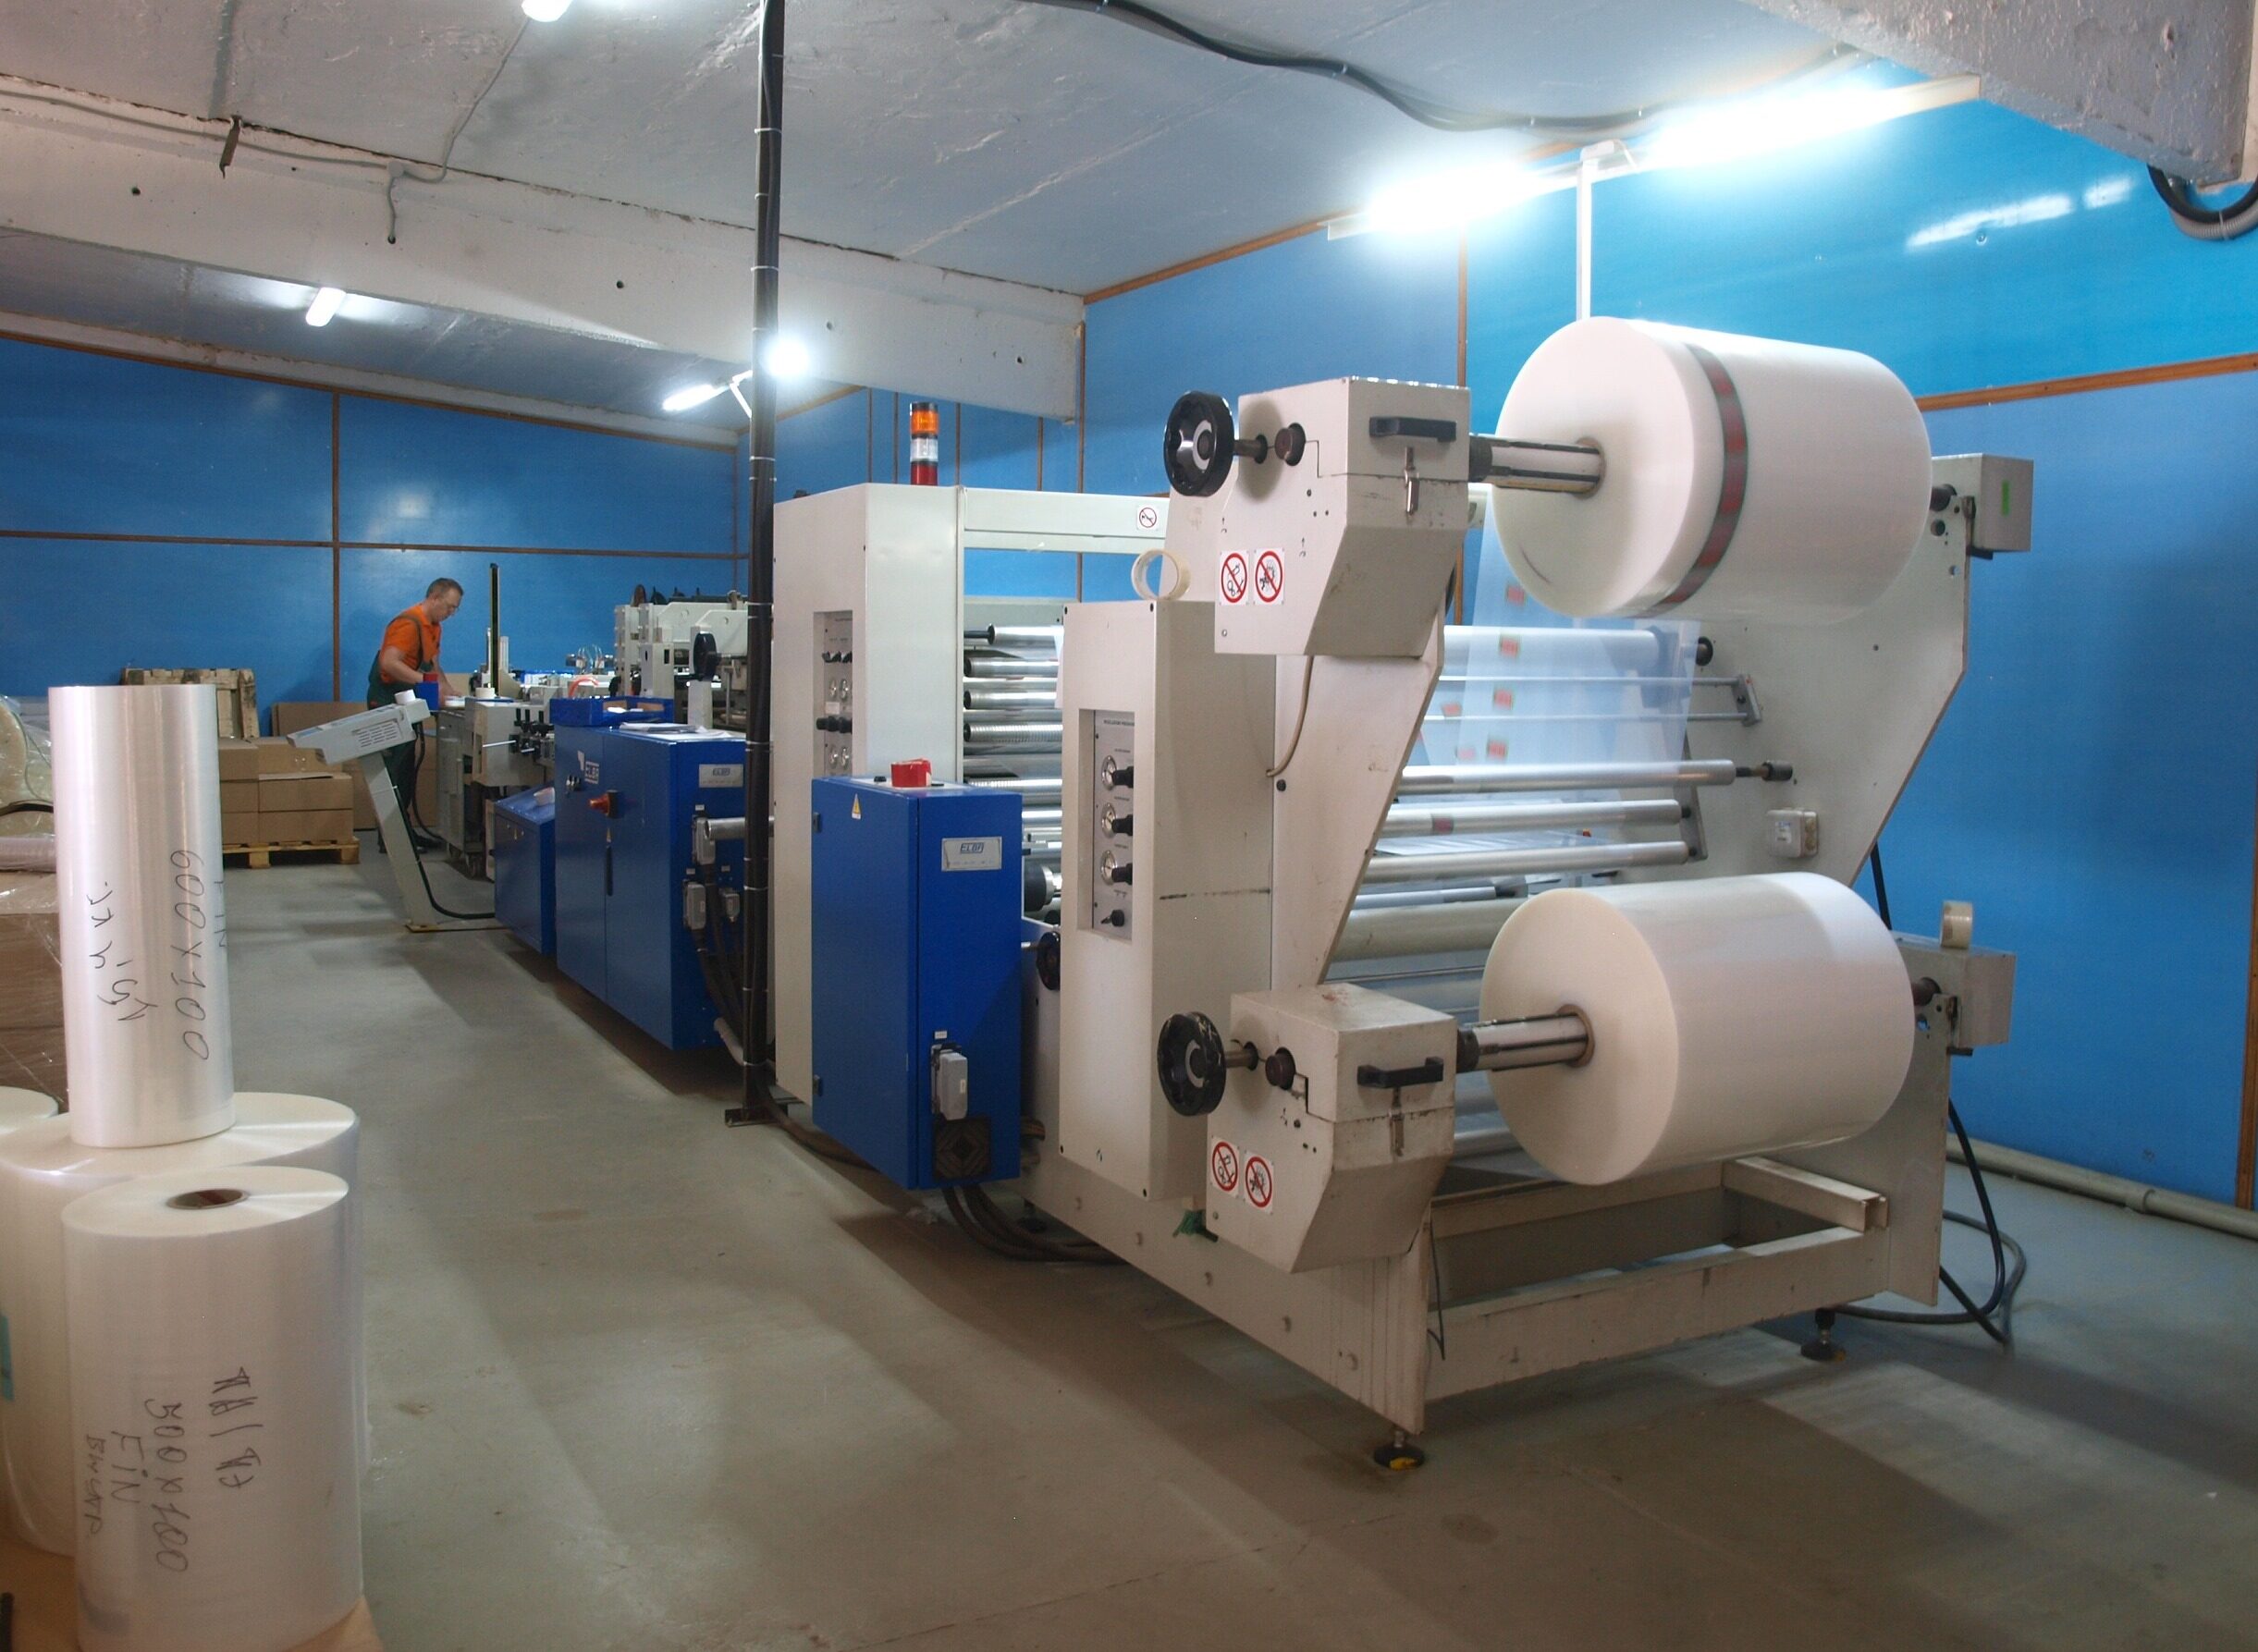 вакуум в производстве  бумаги и печати